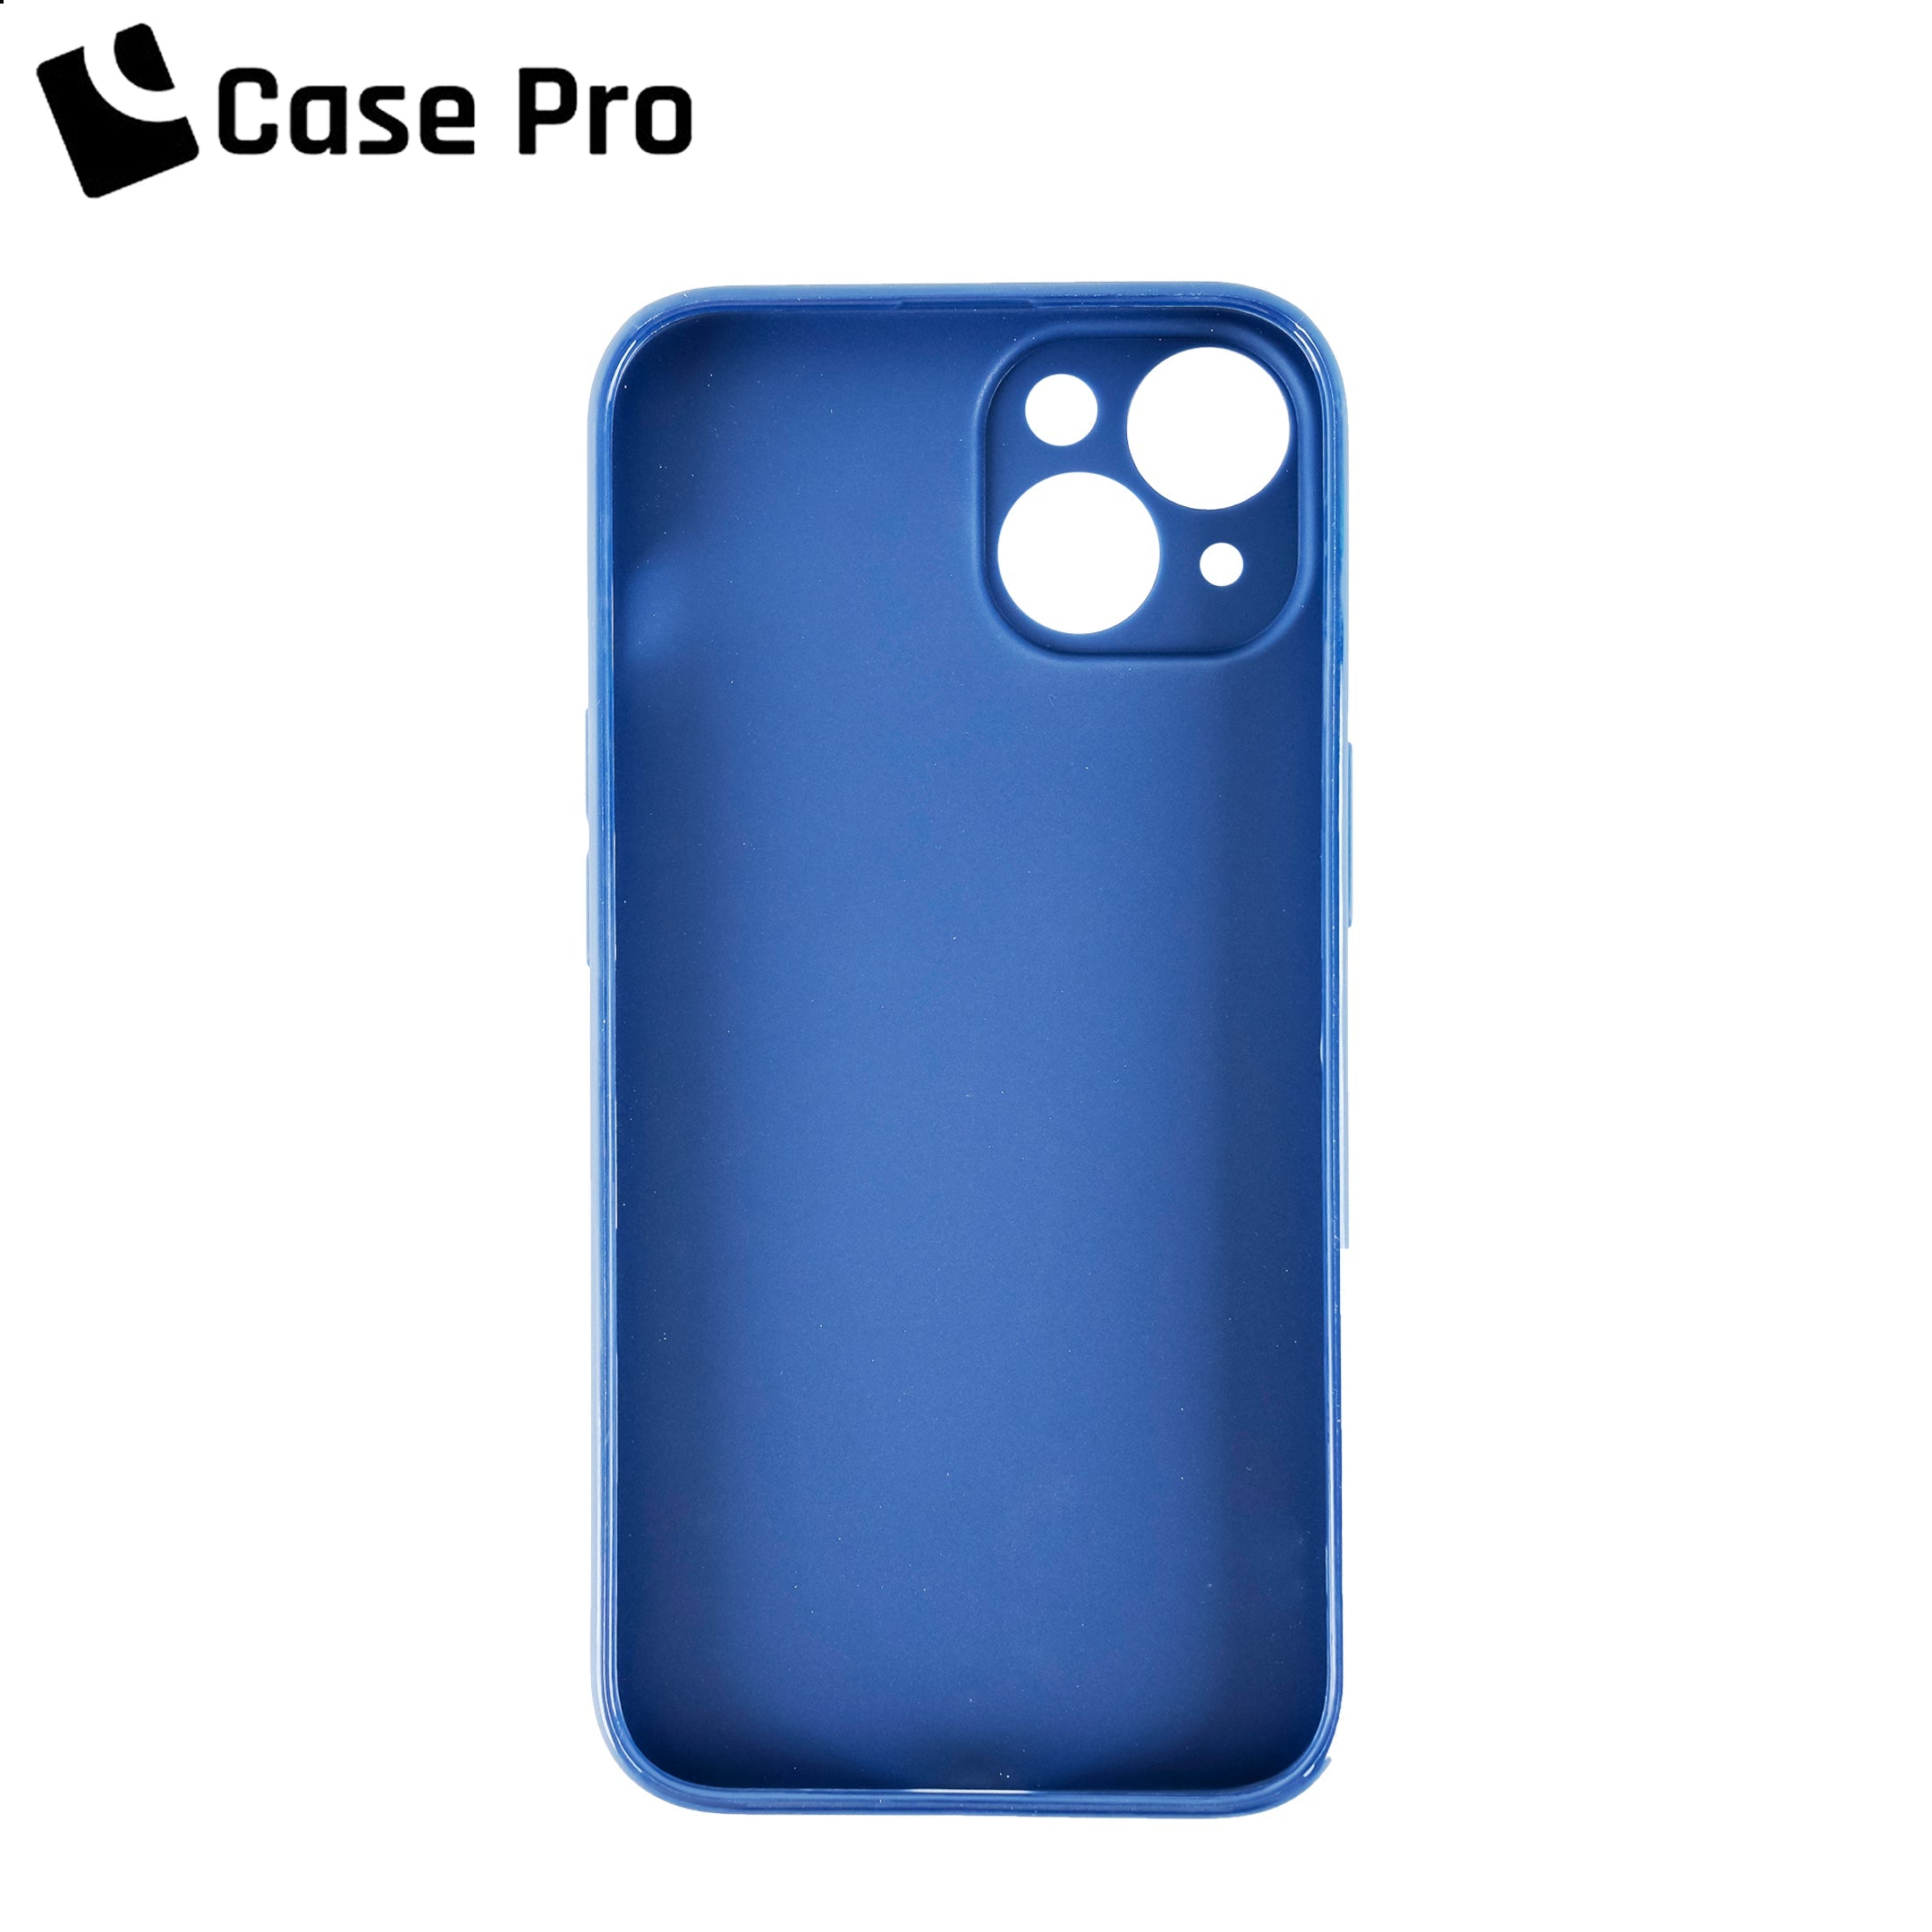 CasePro iPhone 14 Case (Flexible)